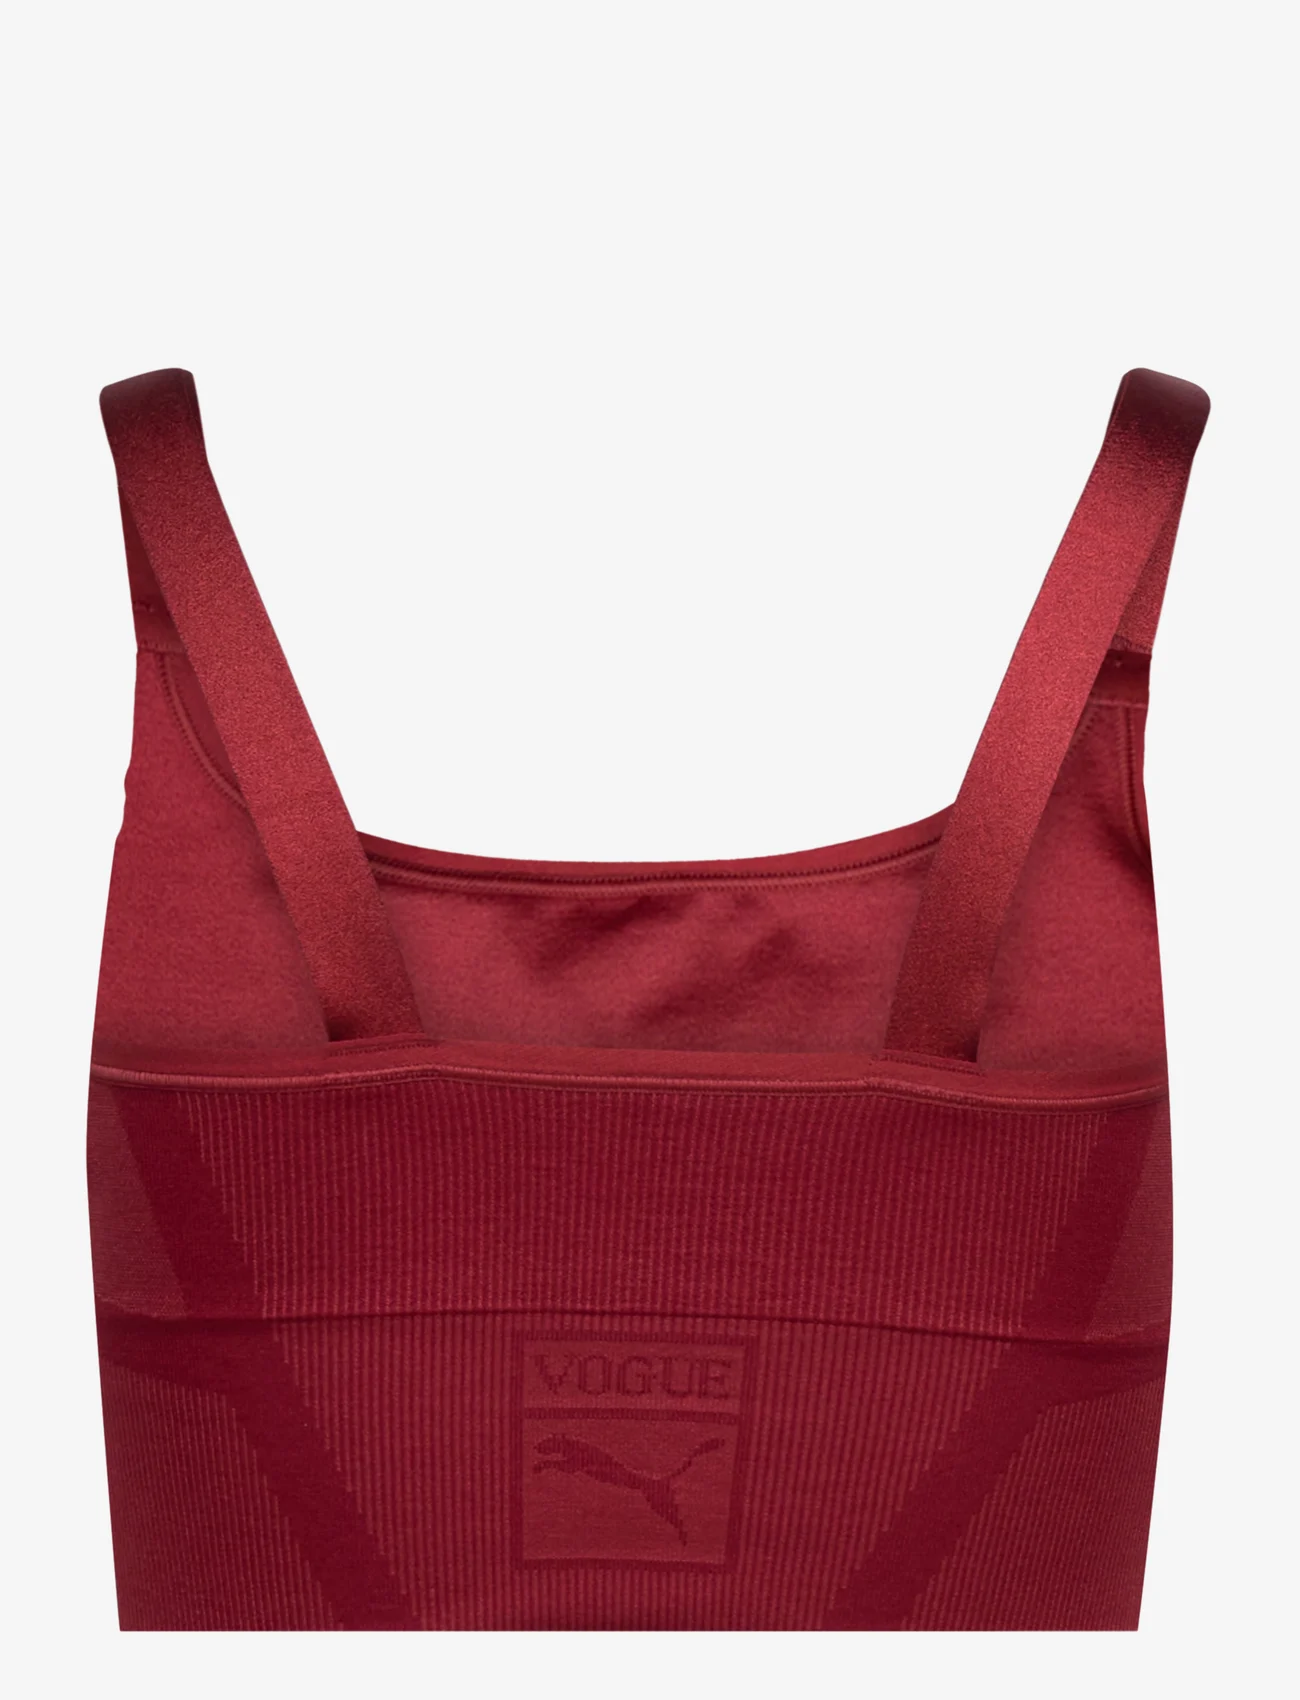 PUMA - PUMA X VOGUE Seamless Bra Top - tank top bras - intense red - 1